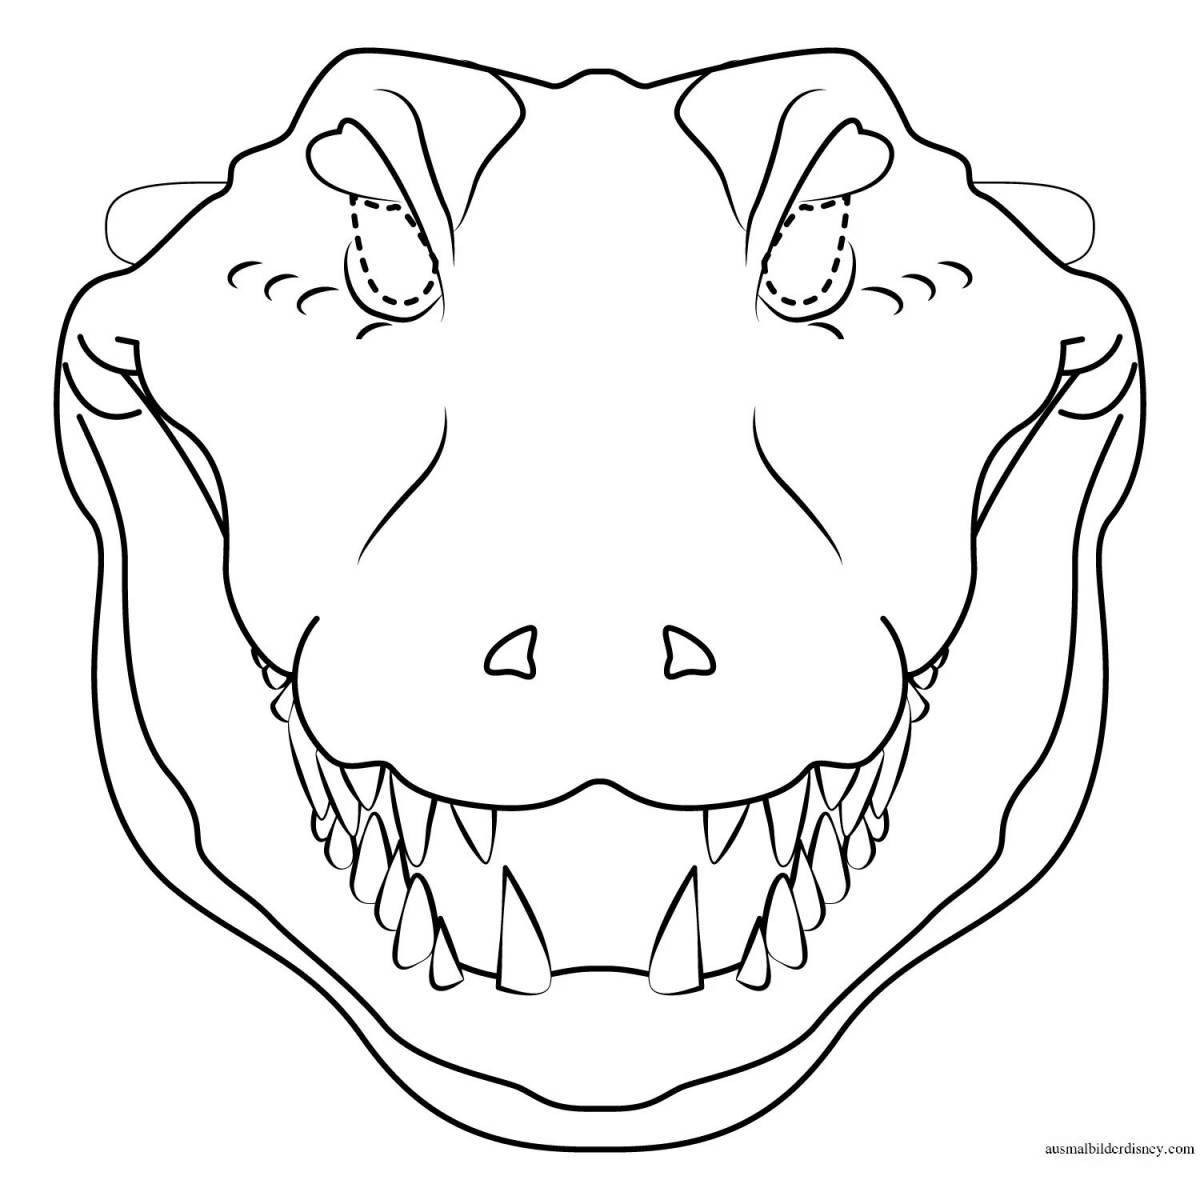 Raptor mask coloring page